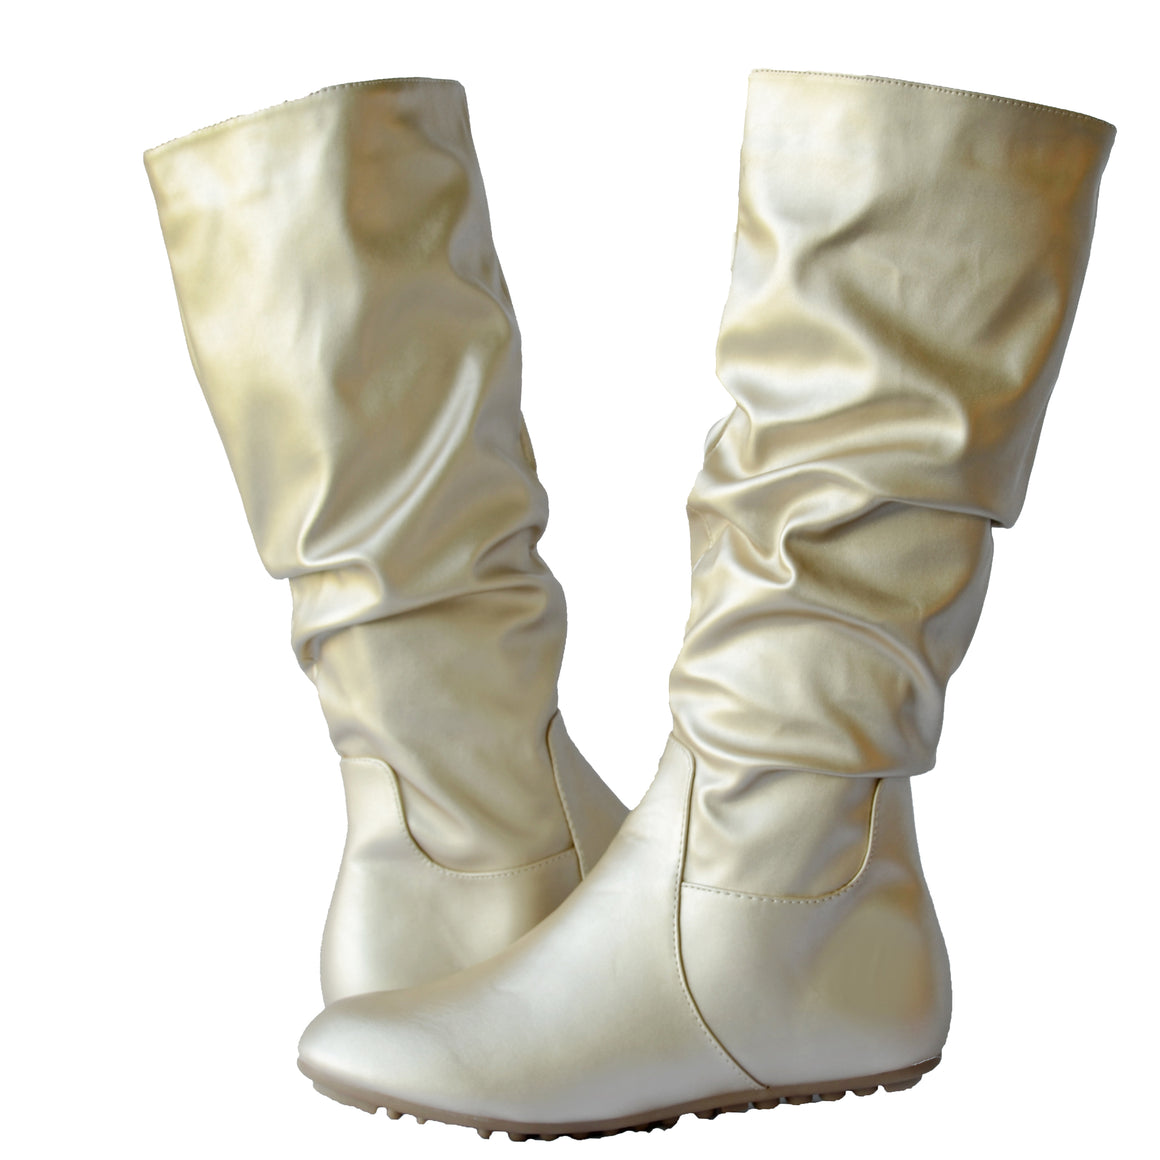 Sidekick Carnival Boots - Fuschia Pink